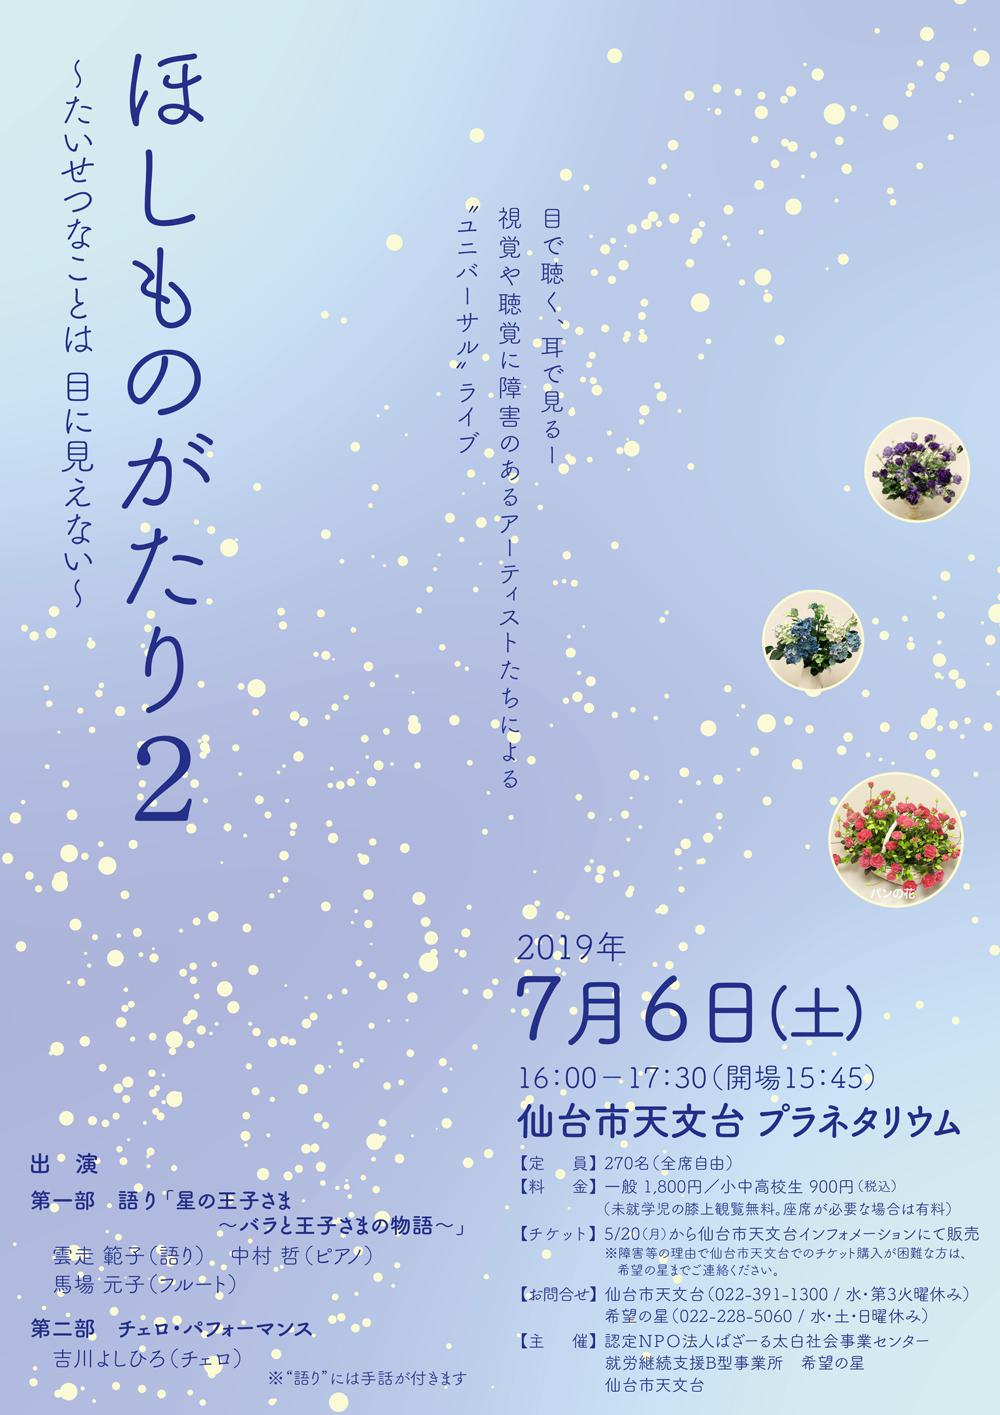 http://www.sendai-astro.jp/event/2019/event_katari01.jpg